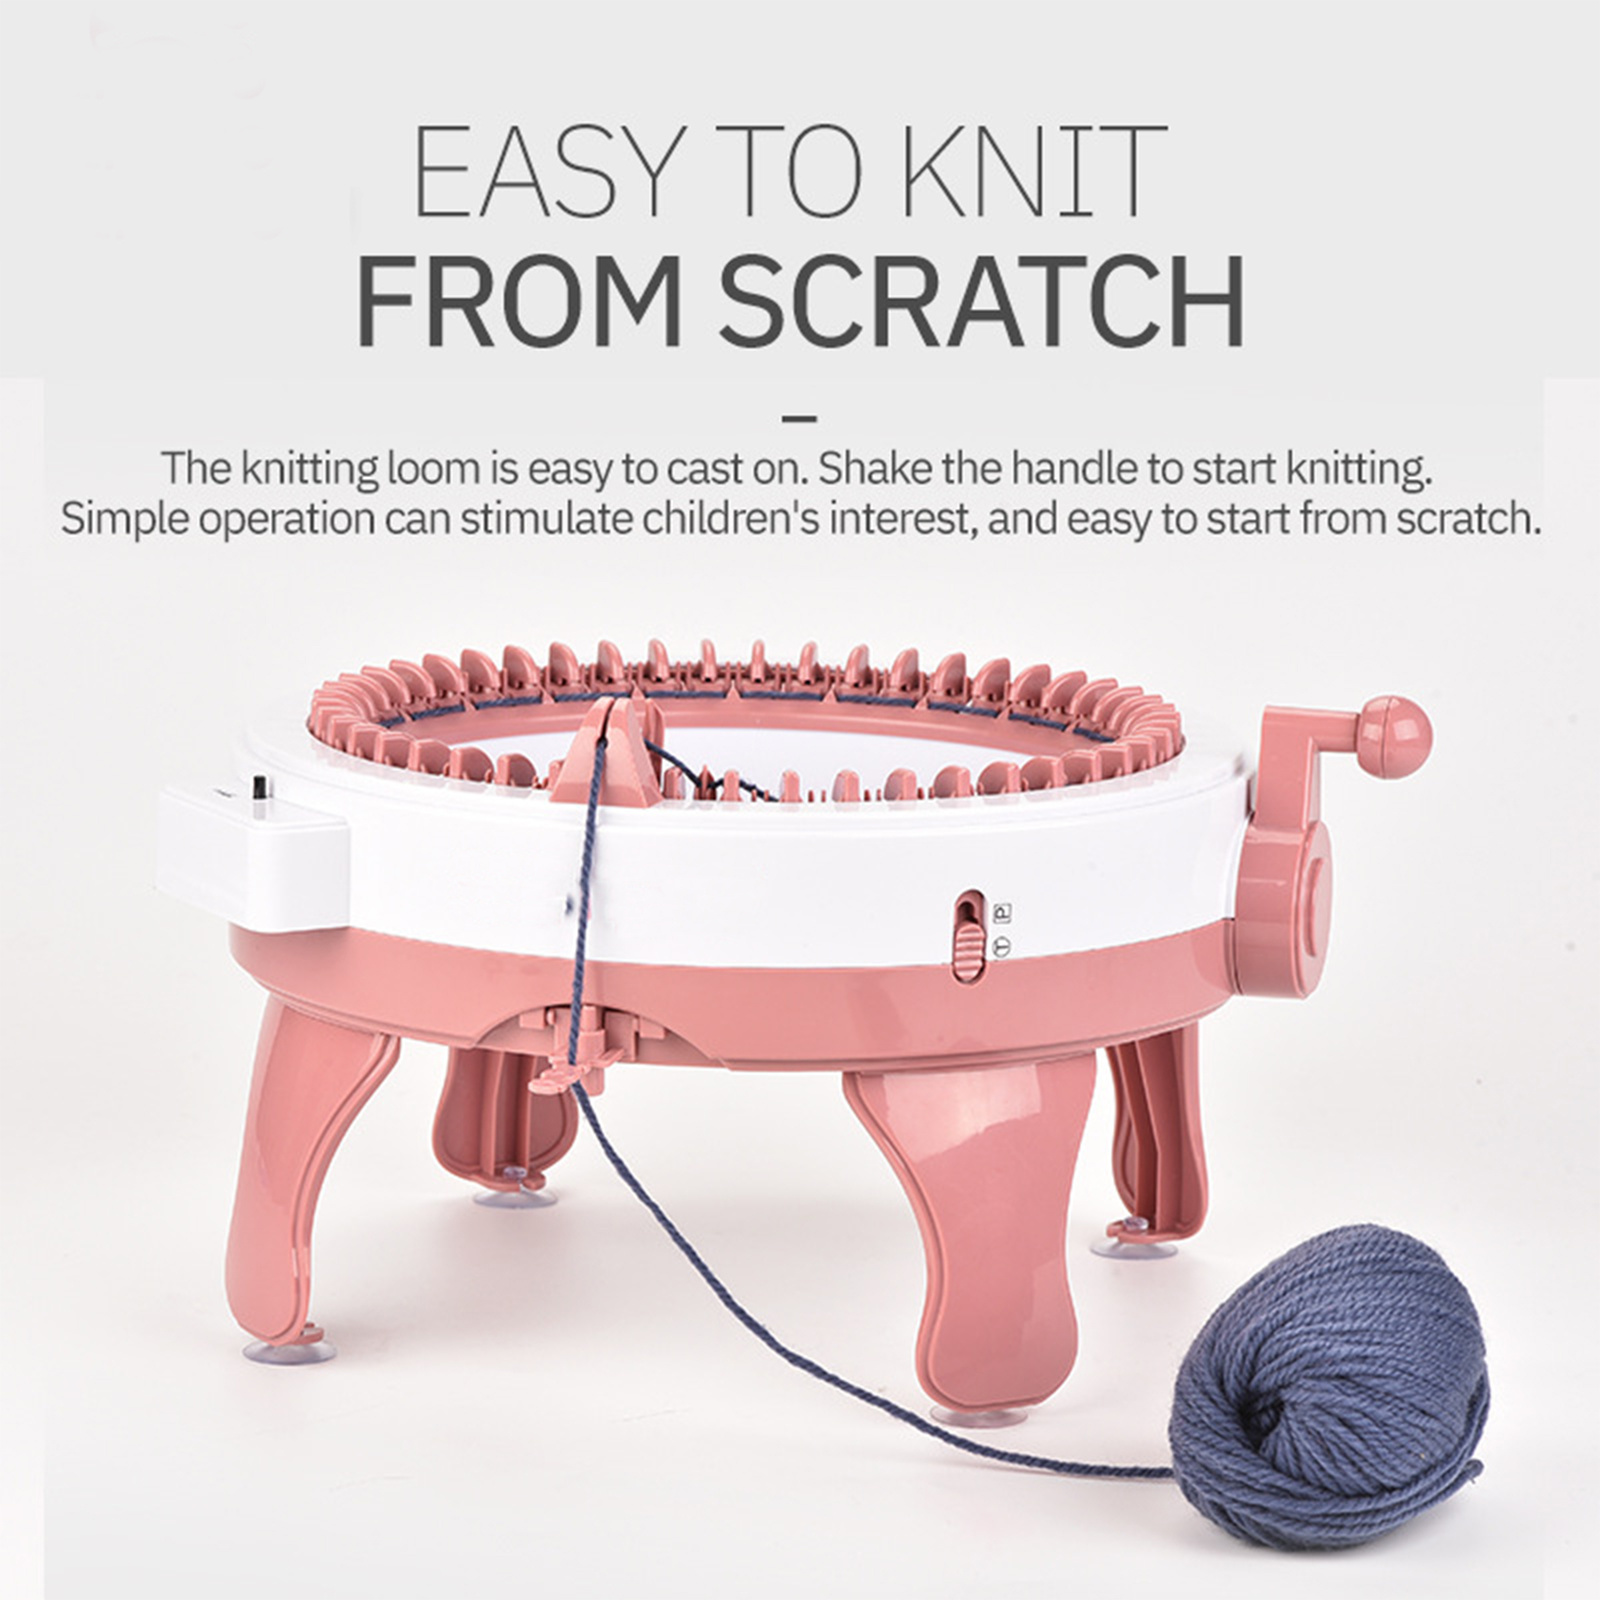 xizhiyo knitting machine 48 needles, smart weaving loom knitting double knitting  machine kit for adults or